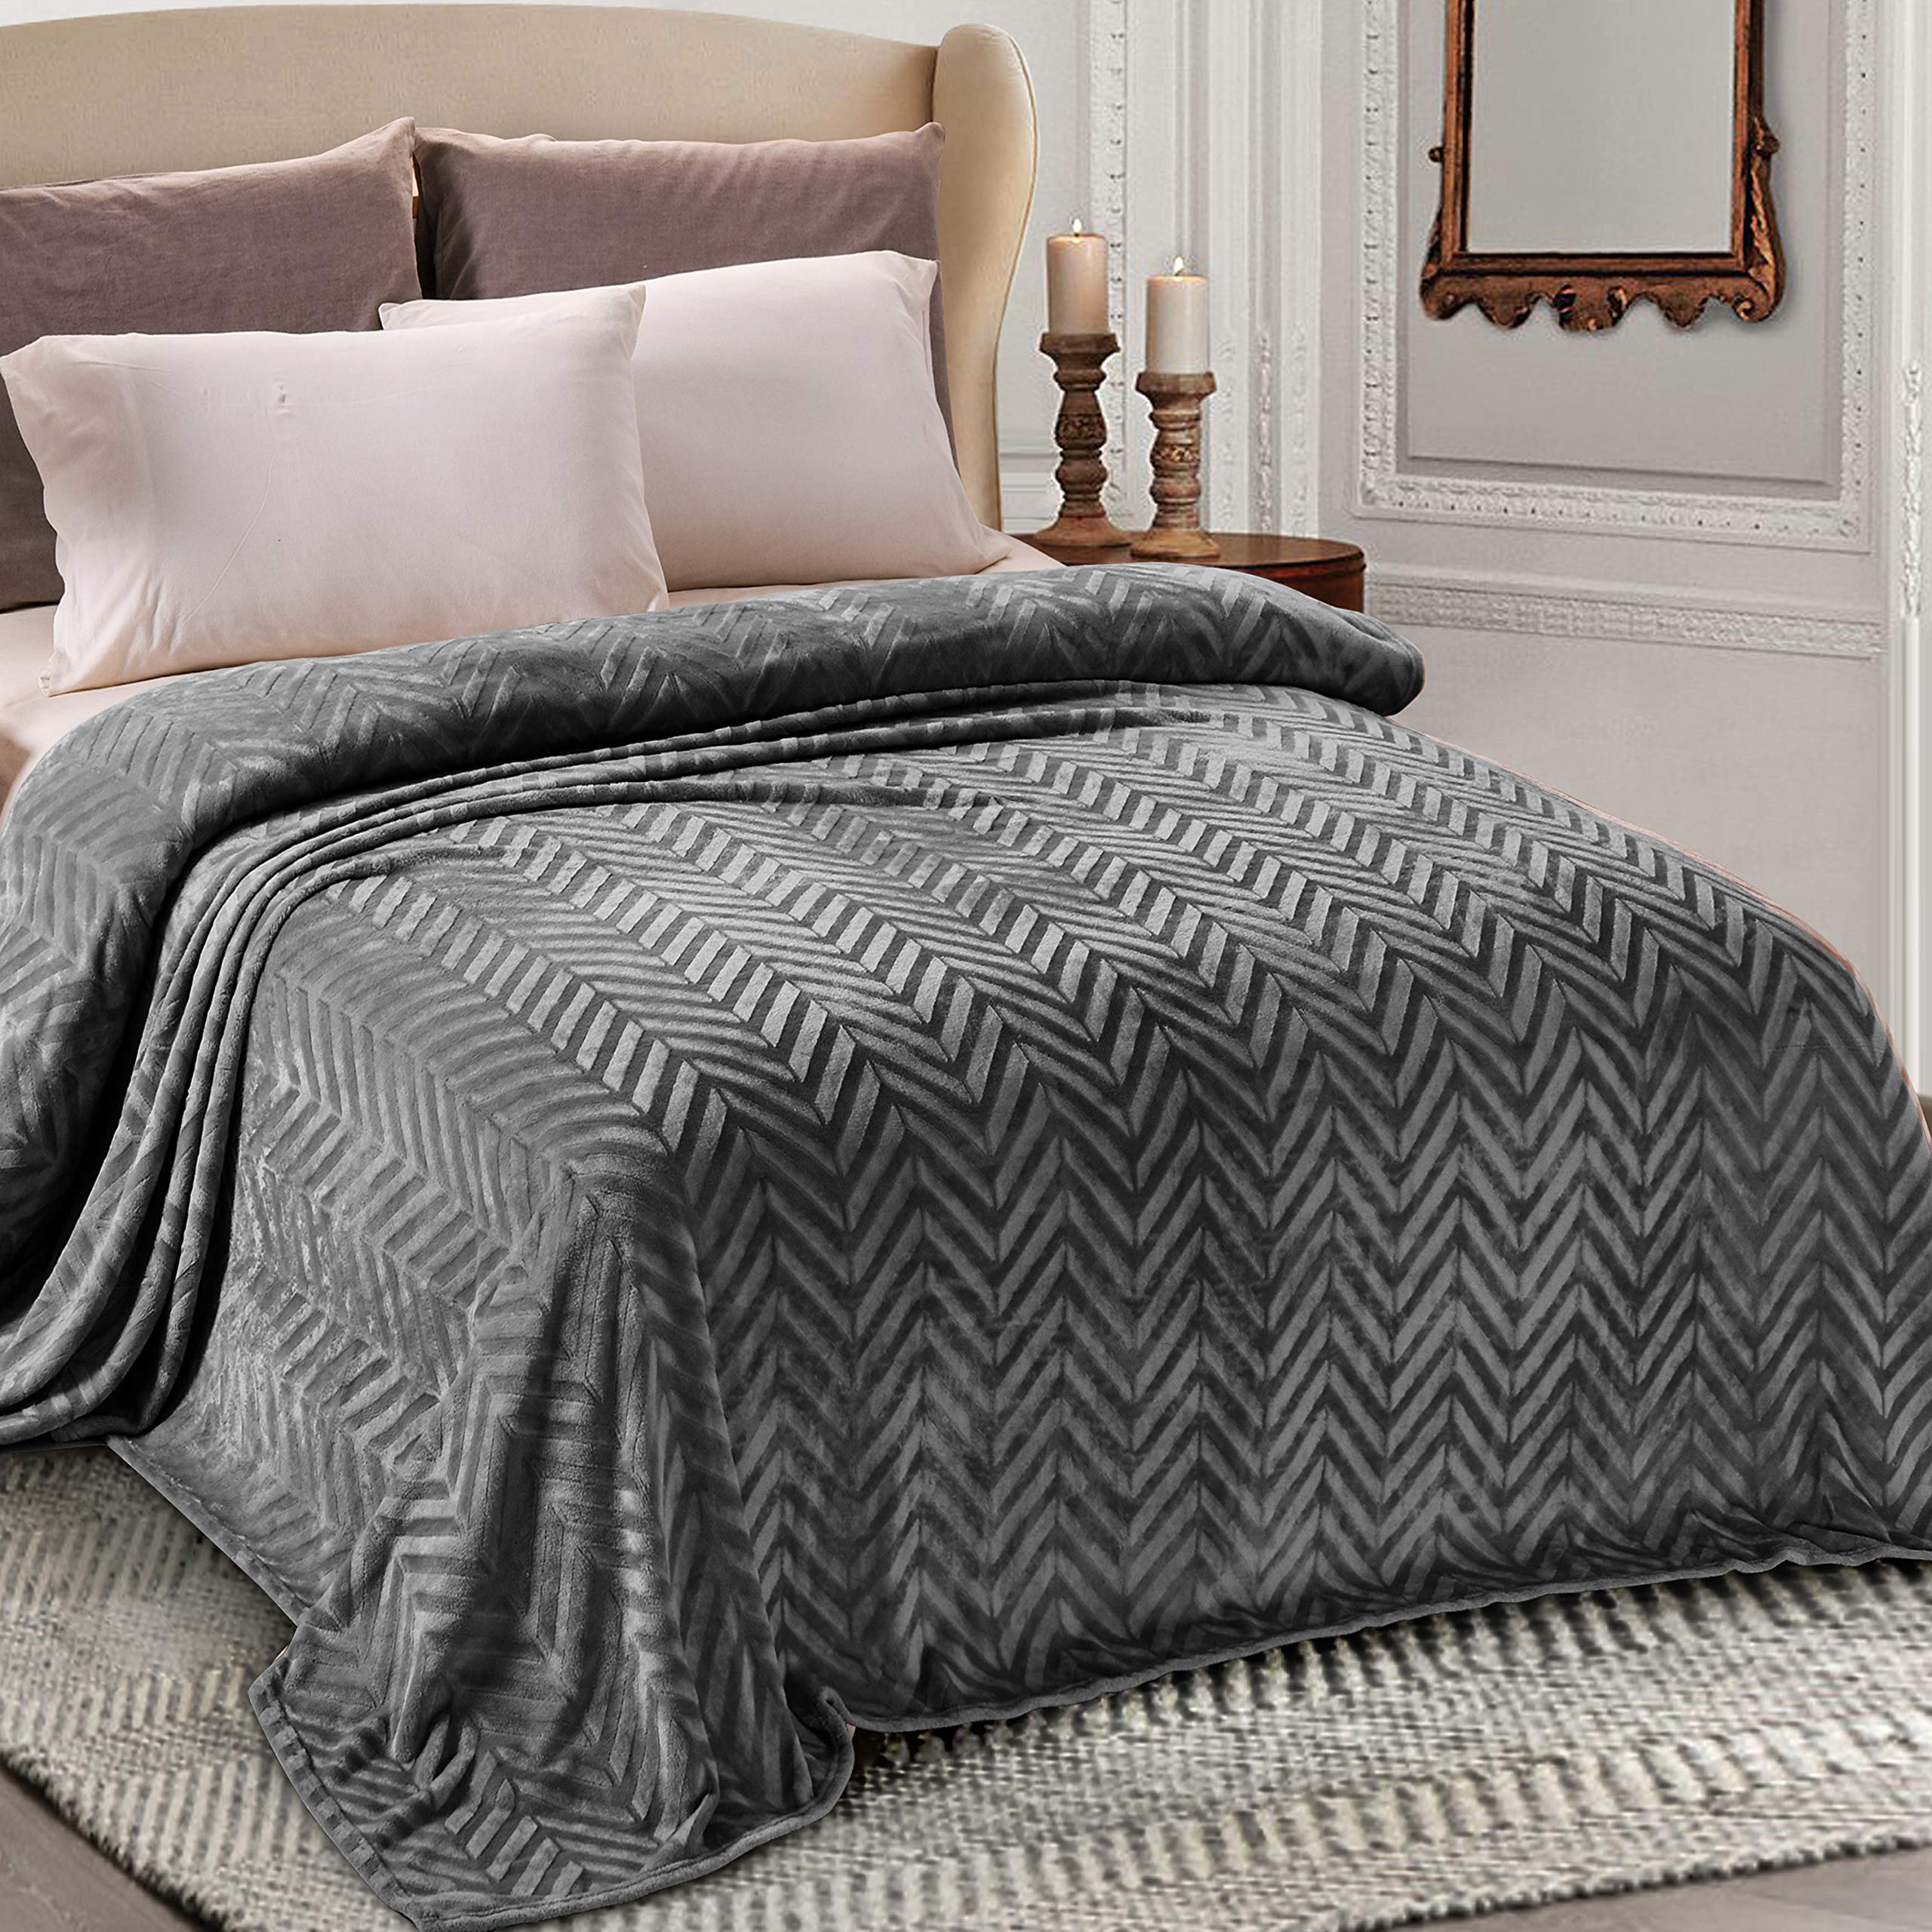 Whale Flotilla Flannel Fleece King Size Bed Blanket, Soft Velvet Lightweight Bedspread Plush Fluffy coverlet chevron Design Deco